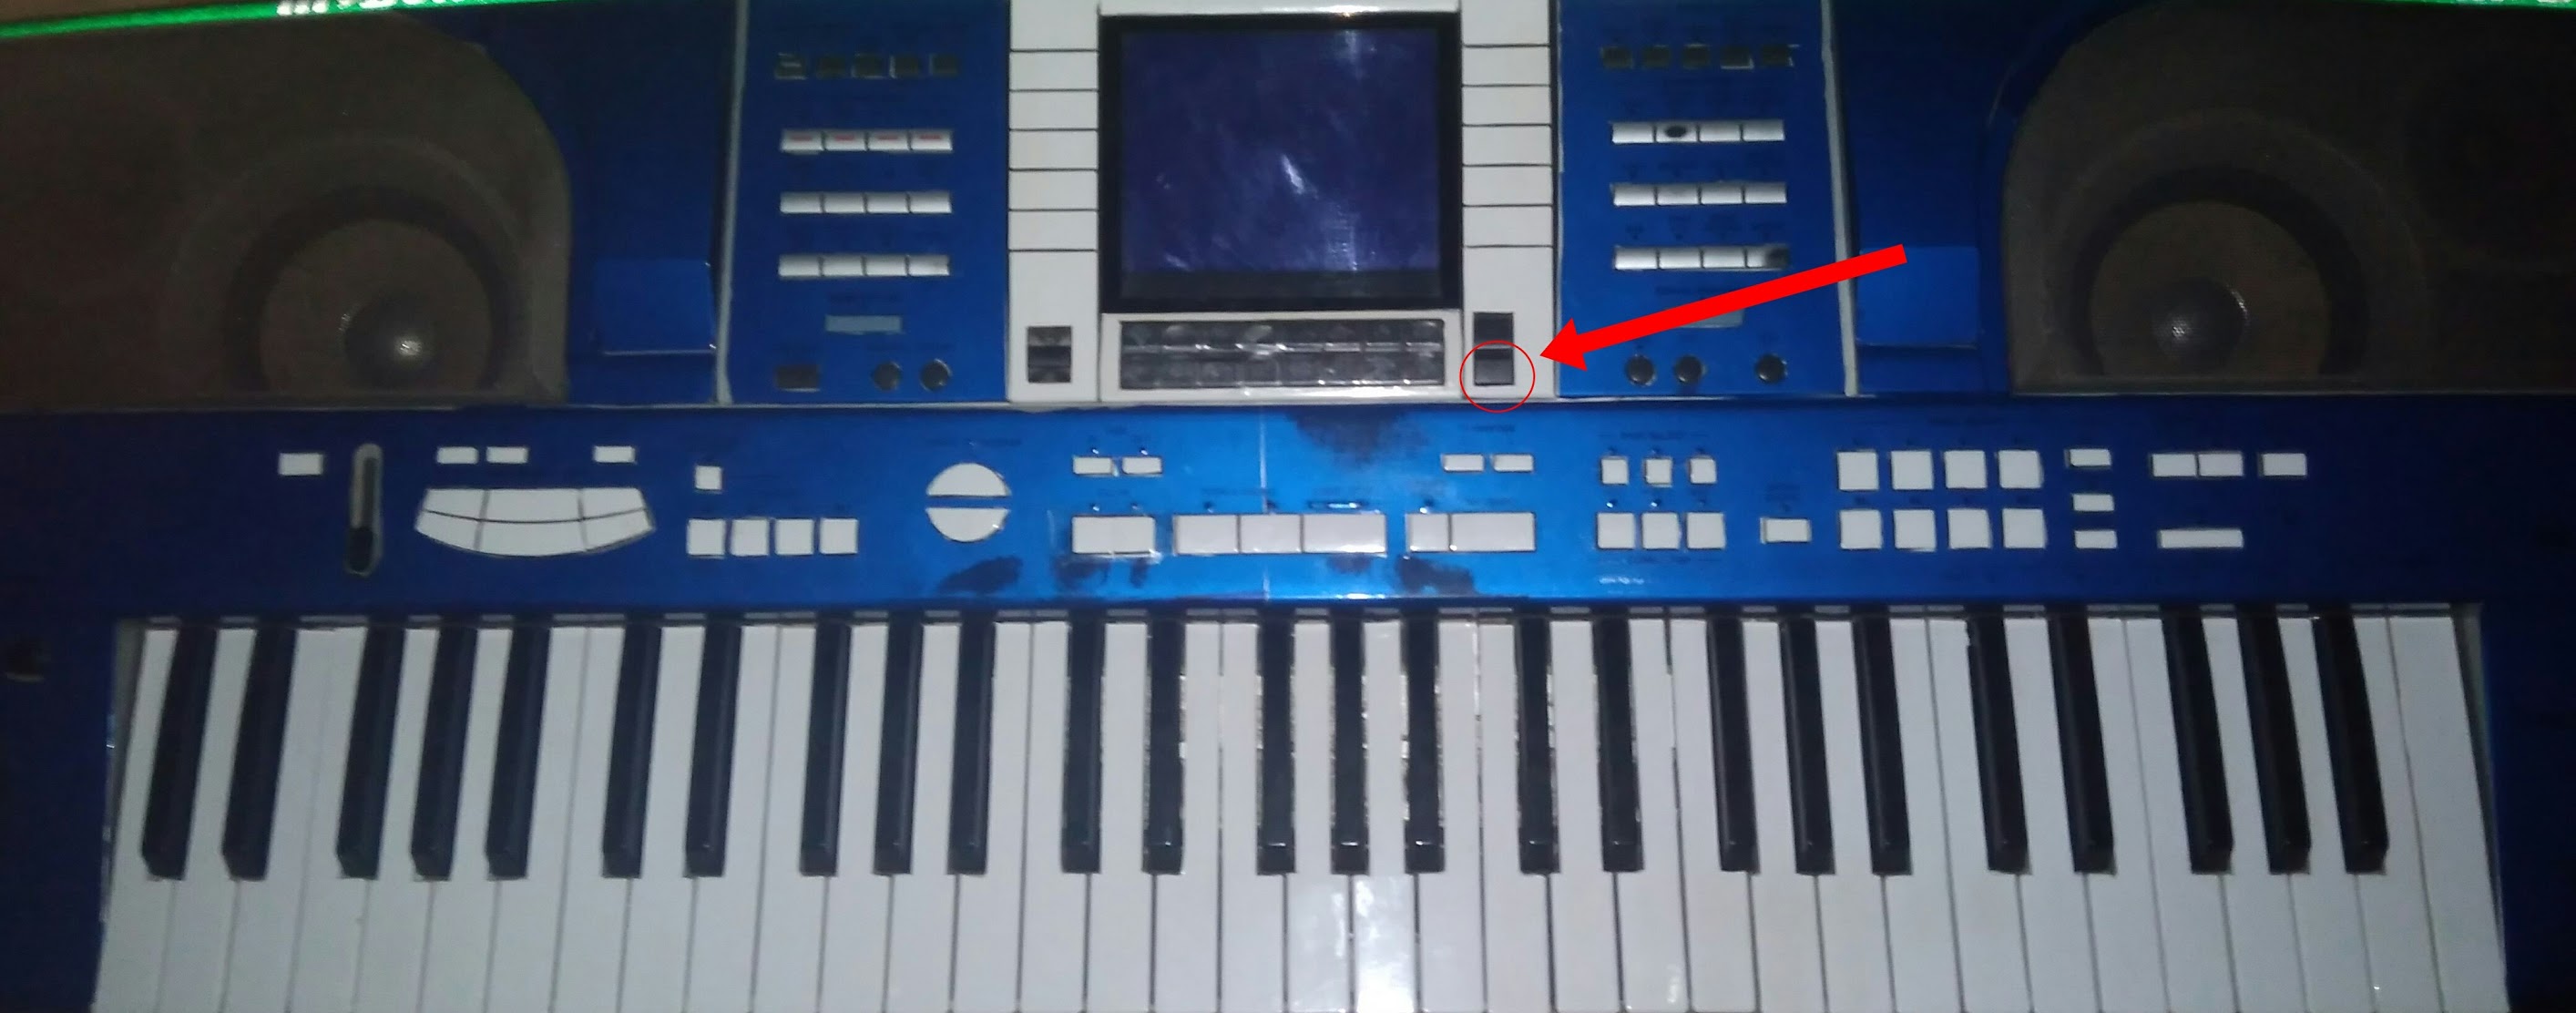 Tutorial edit drum kit atau kendang keyboard technics kn2600/2600 dengan mudah